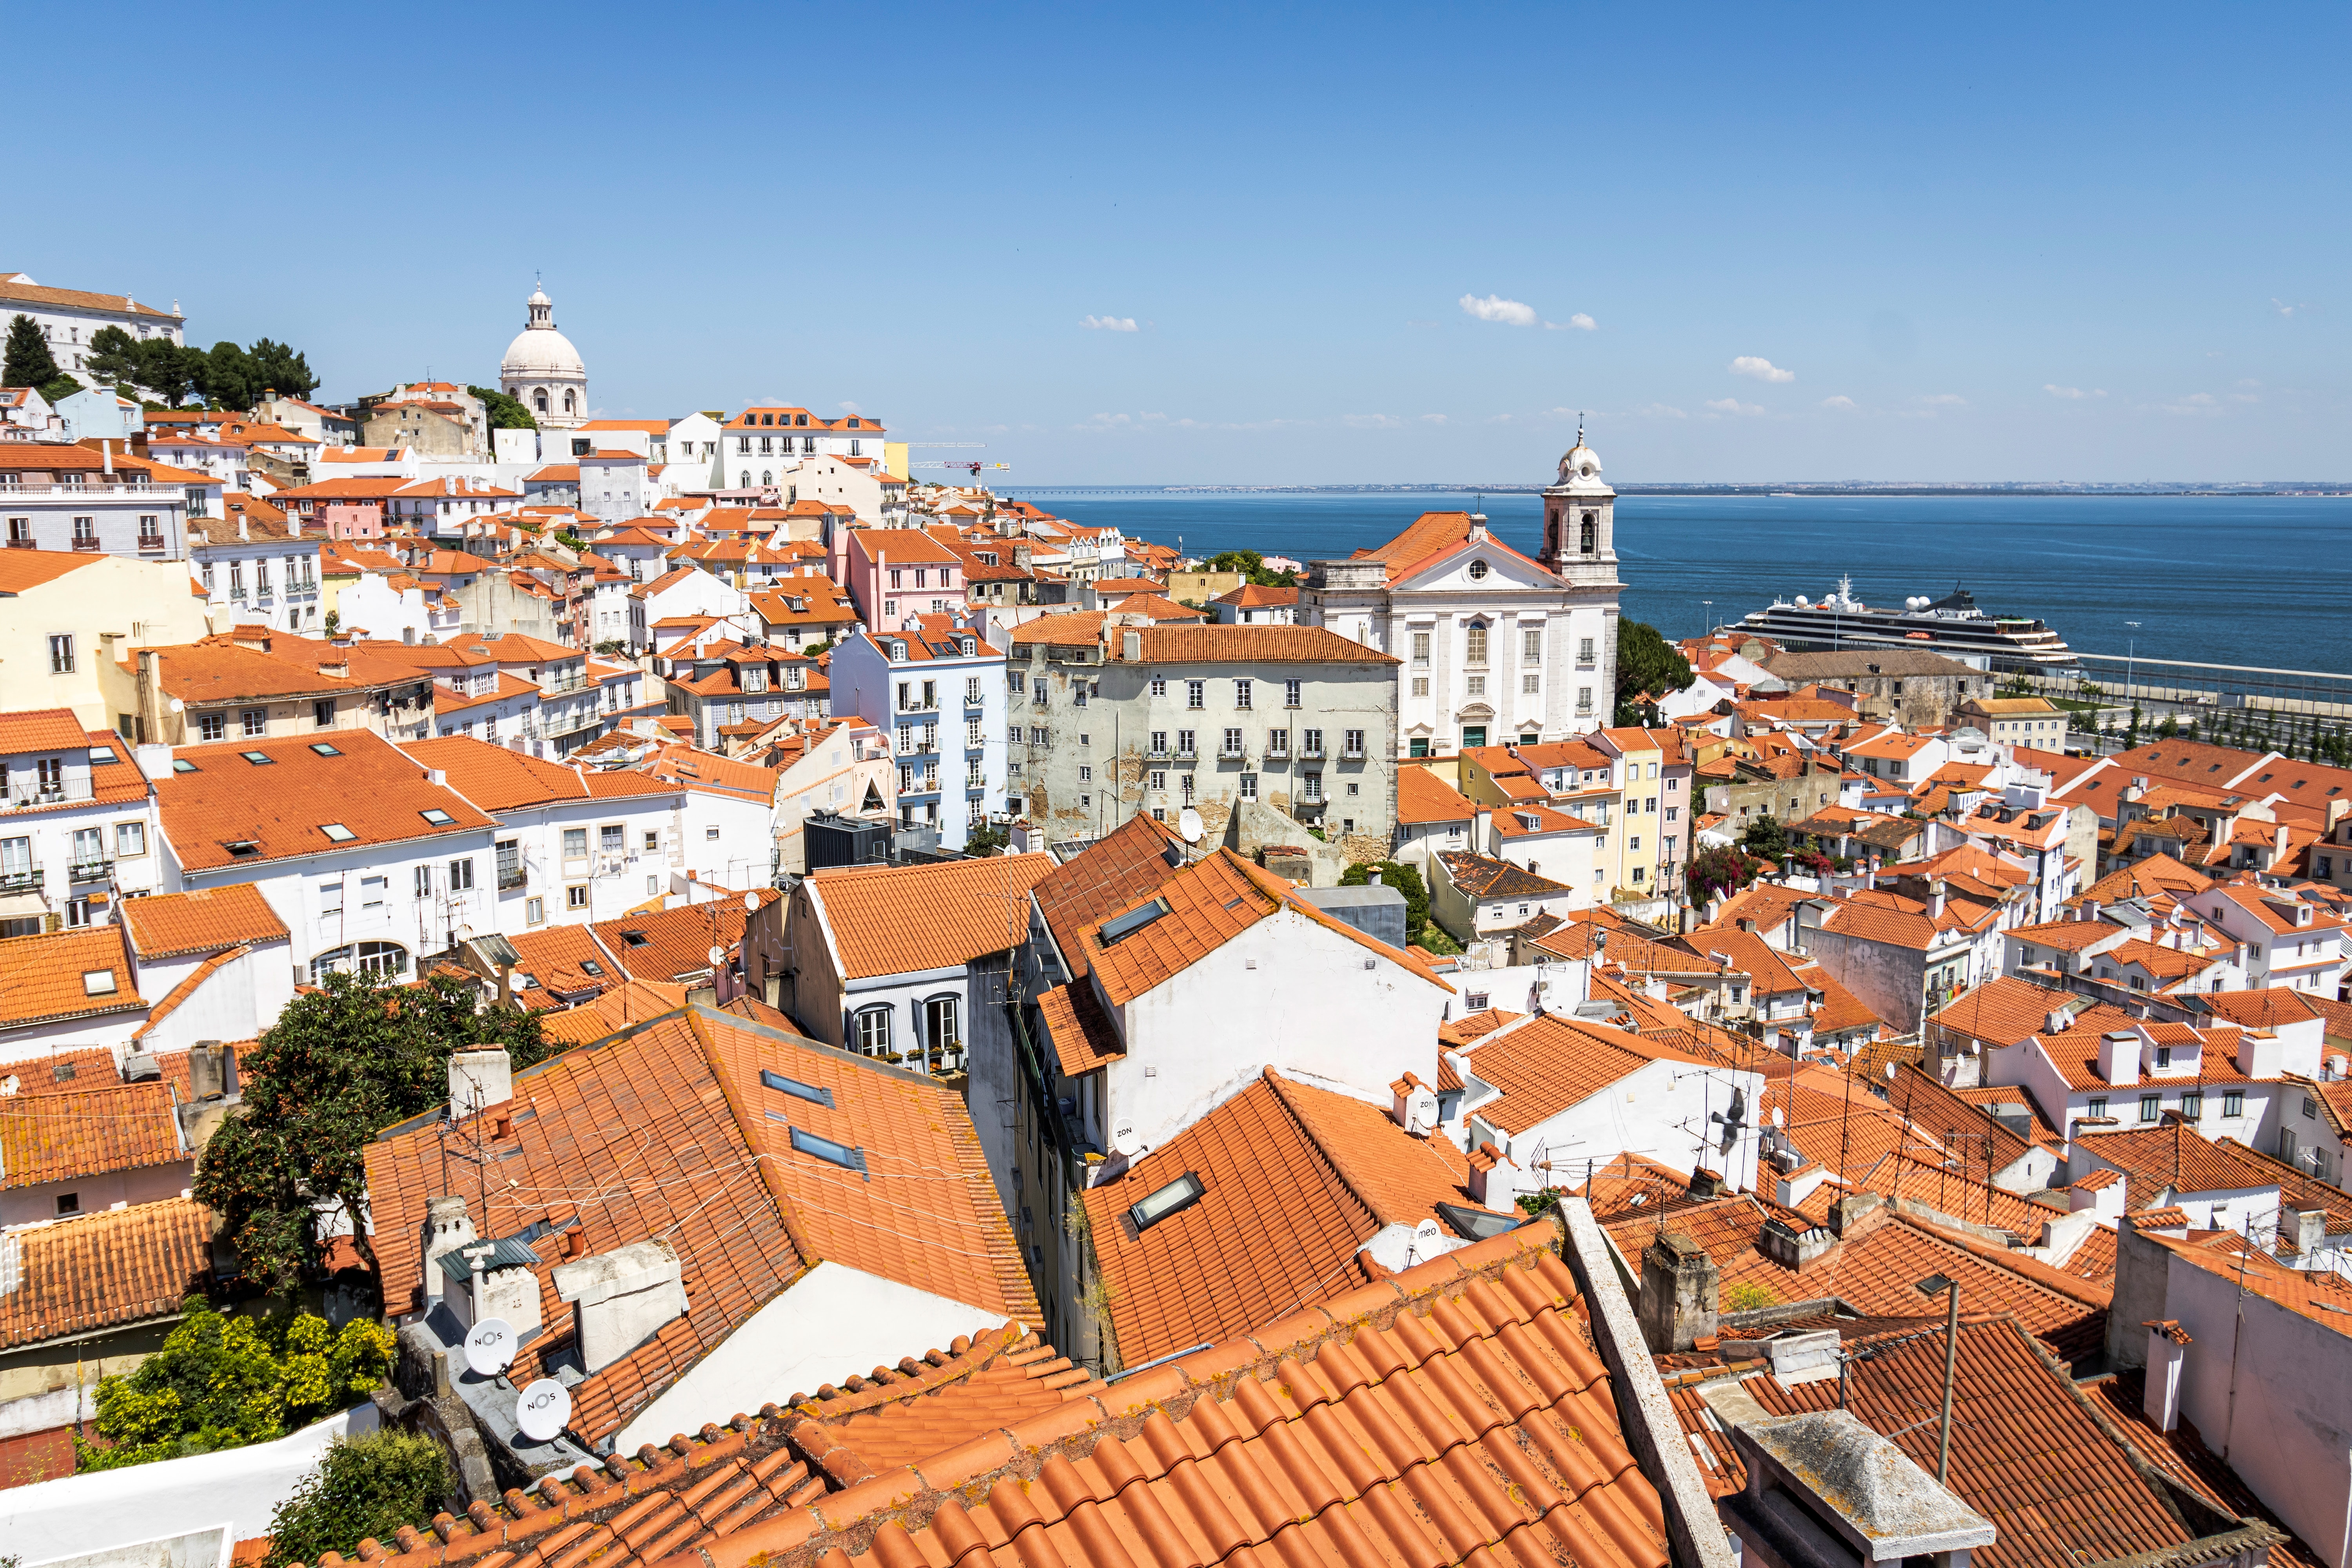 Citytrip Lissabon voor beginners